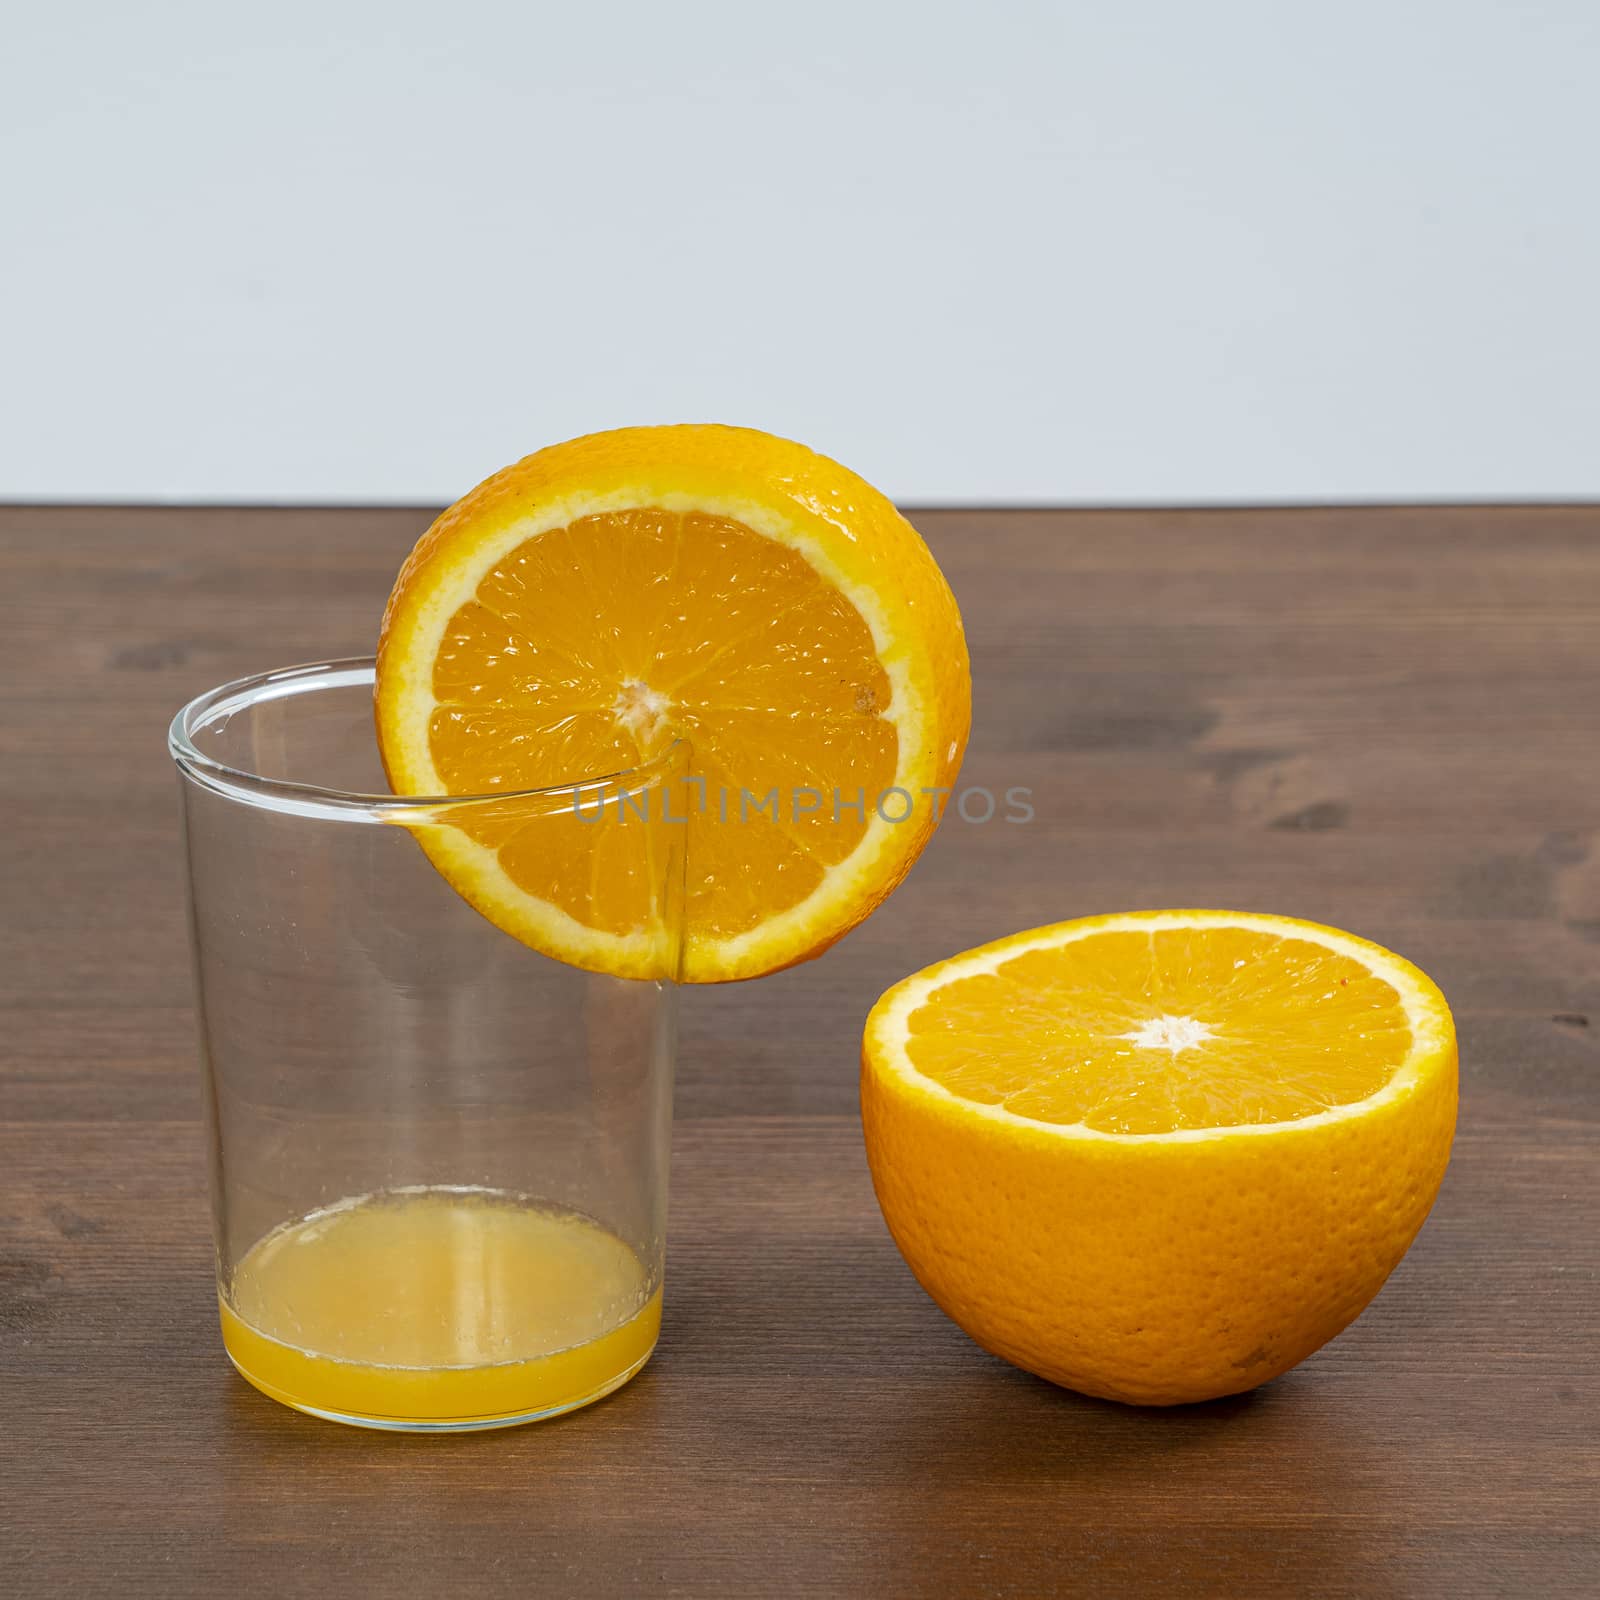 An orange fruit  by sergiodv